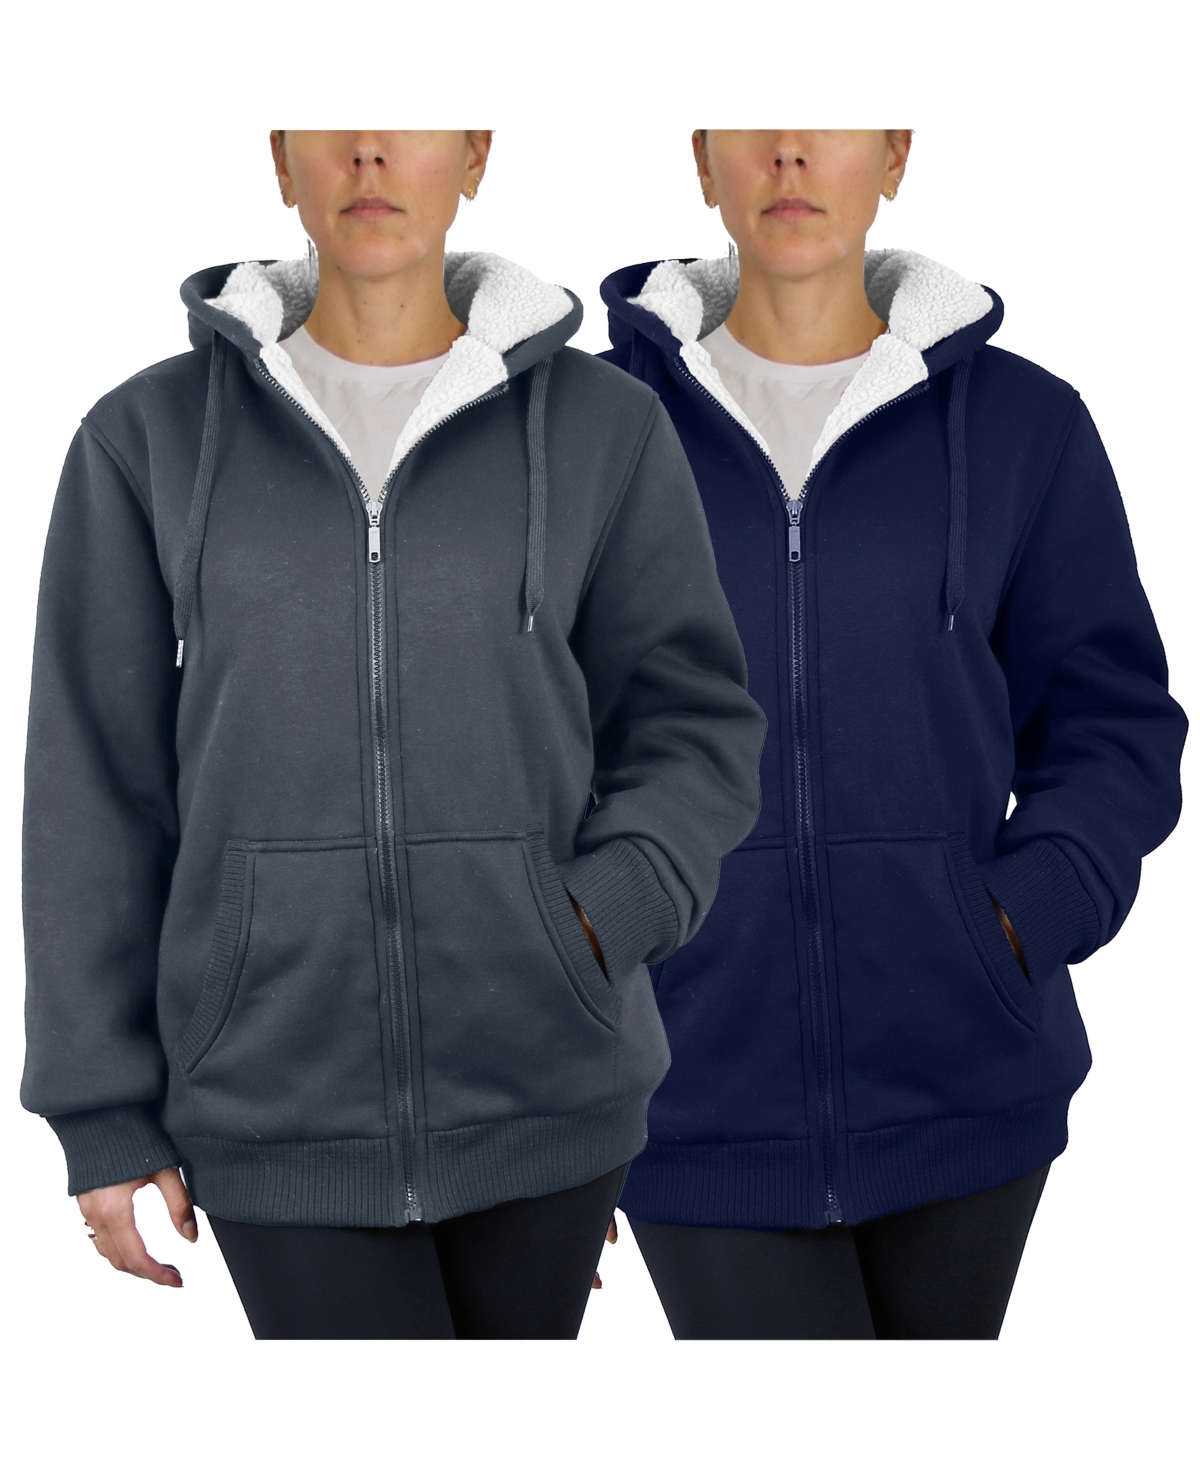  Galaxy By Harvic Women's Loose Fit Sherpa Lined Fleece Zip-Up Hoodie Sweatshirt, Pack of 2